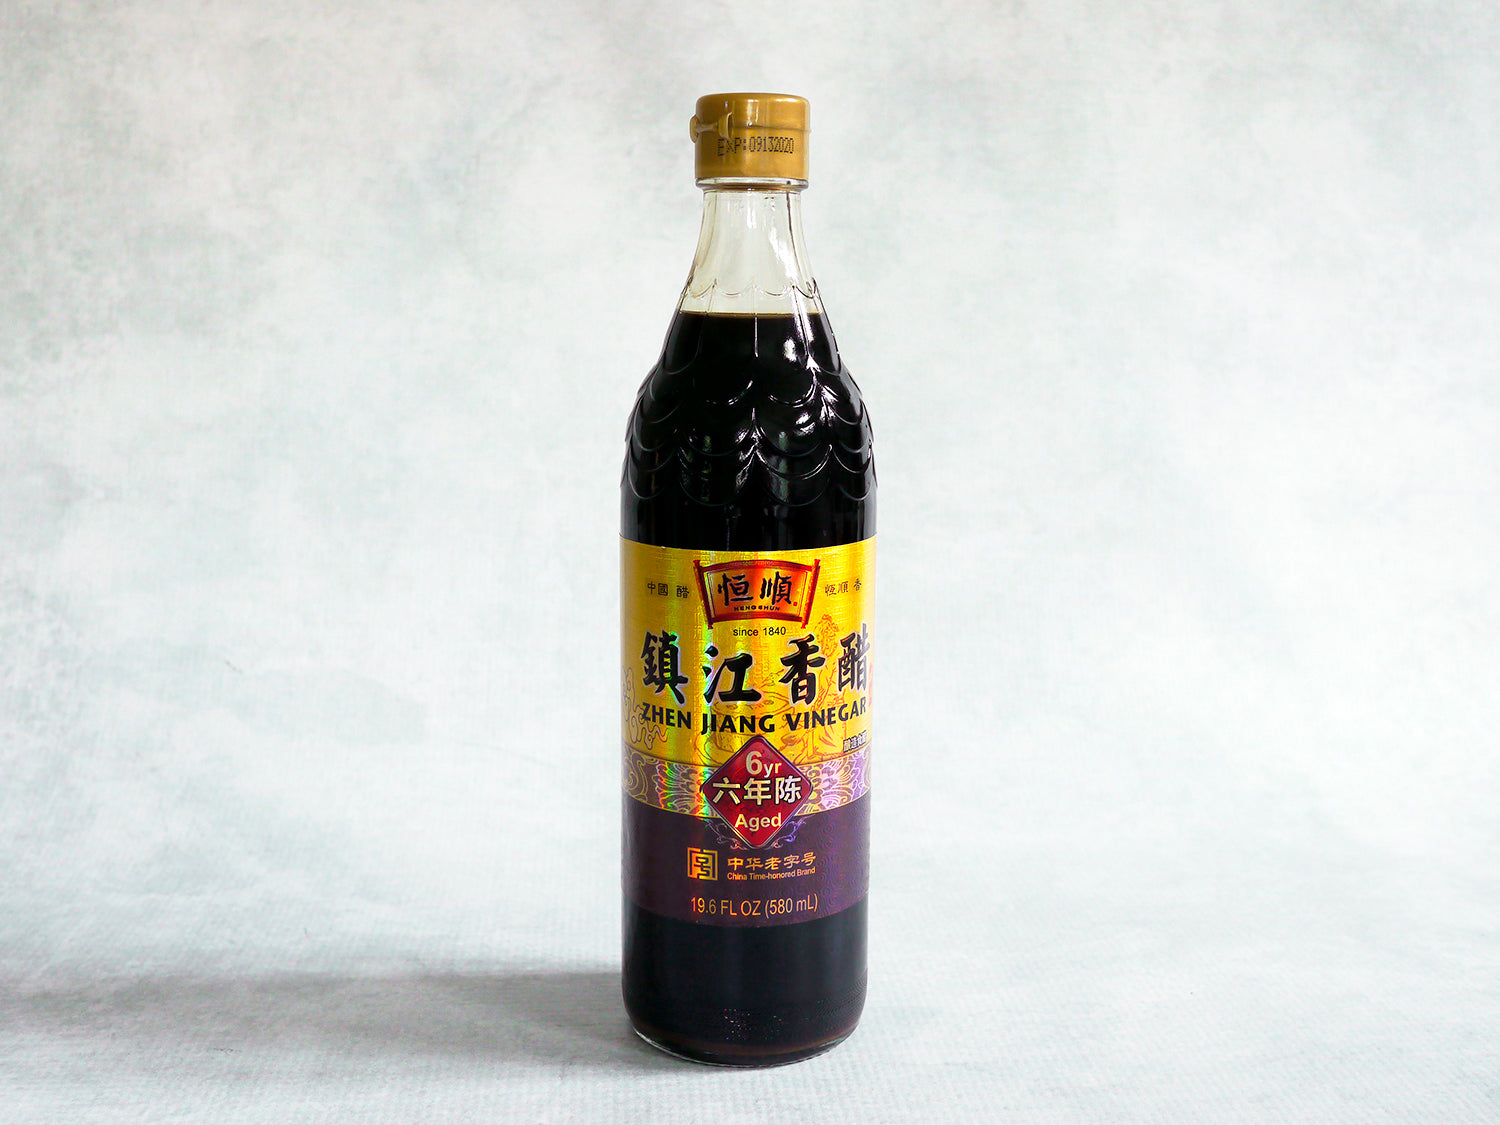 Zhenjiang Handcrafted Vinegar, Aged 6 Years (Chinkiang Black Vinegar)